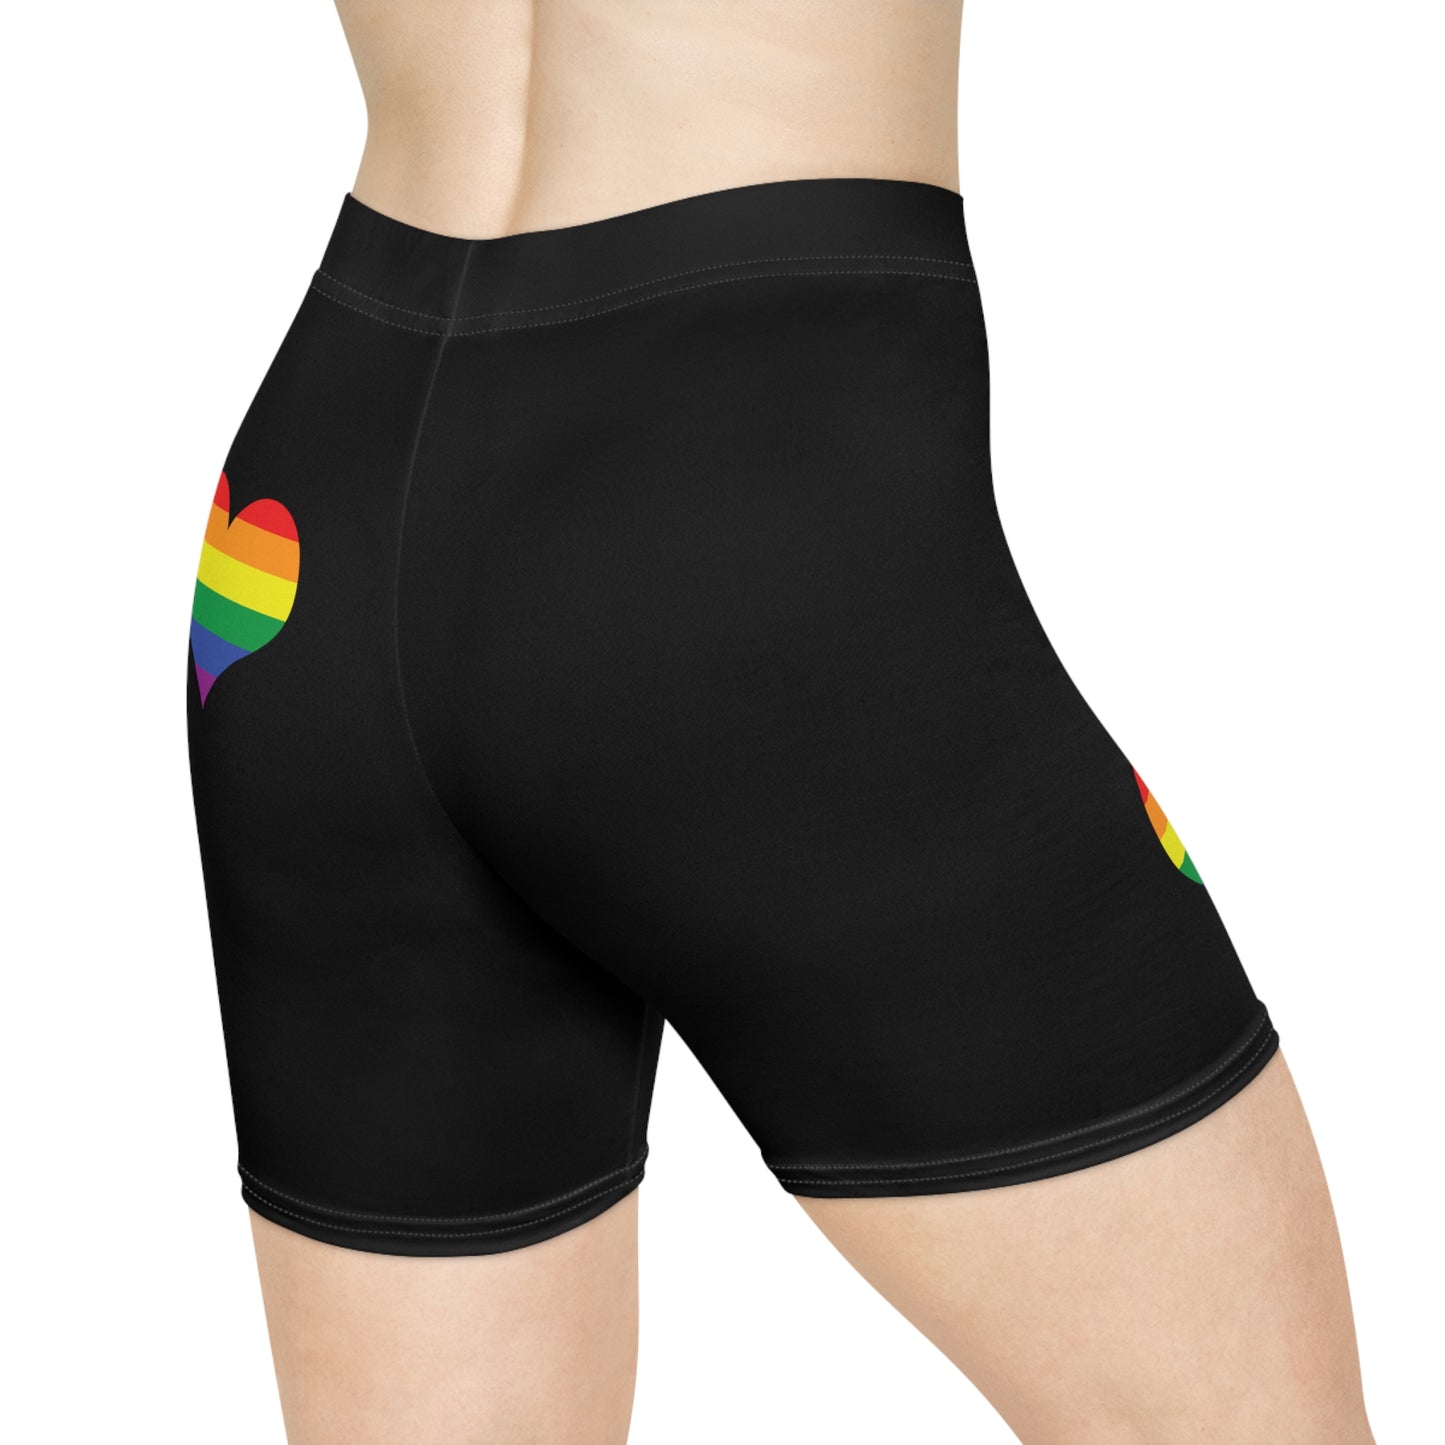 Women's Biker Shorts Lgbtq Black Shorts Rainbow Heart